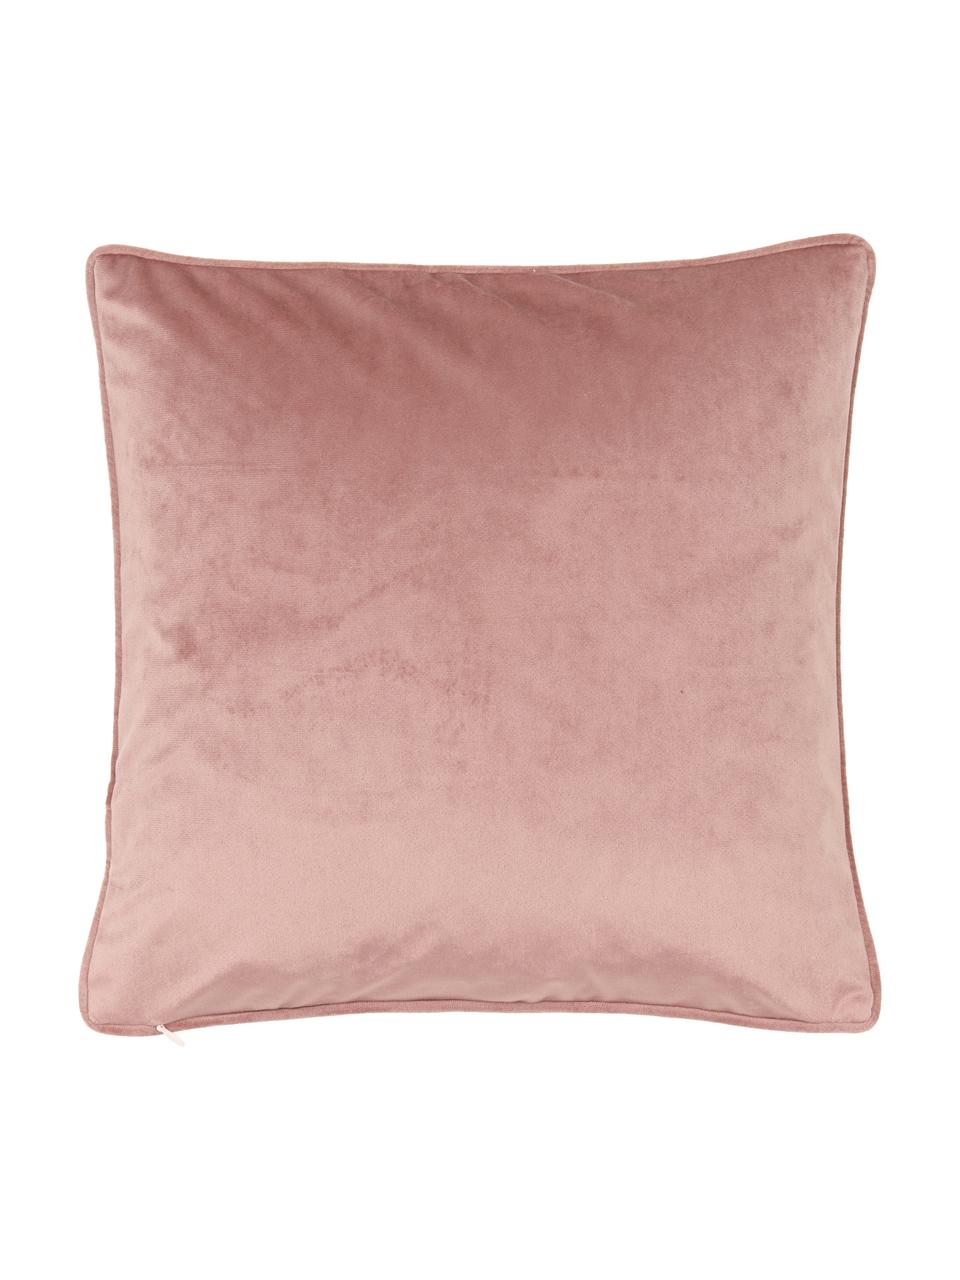 Kissenhülle Indira mit Paisleymuster in Rosatönen, 100% Polyestersamt, Mehrfarbig, 40 x 40 cm